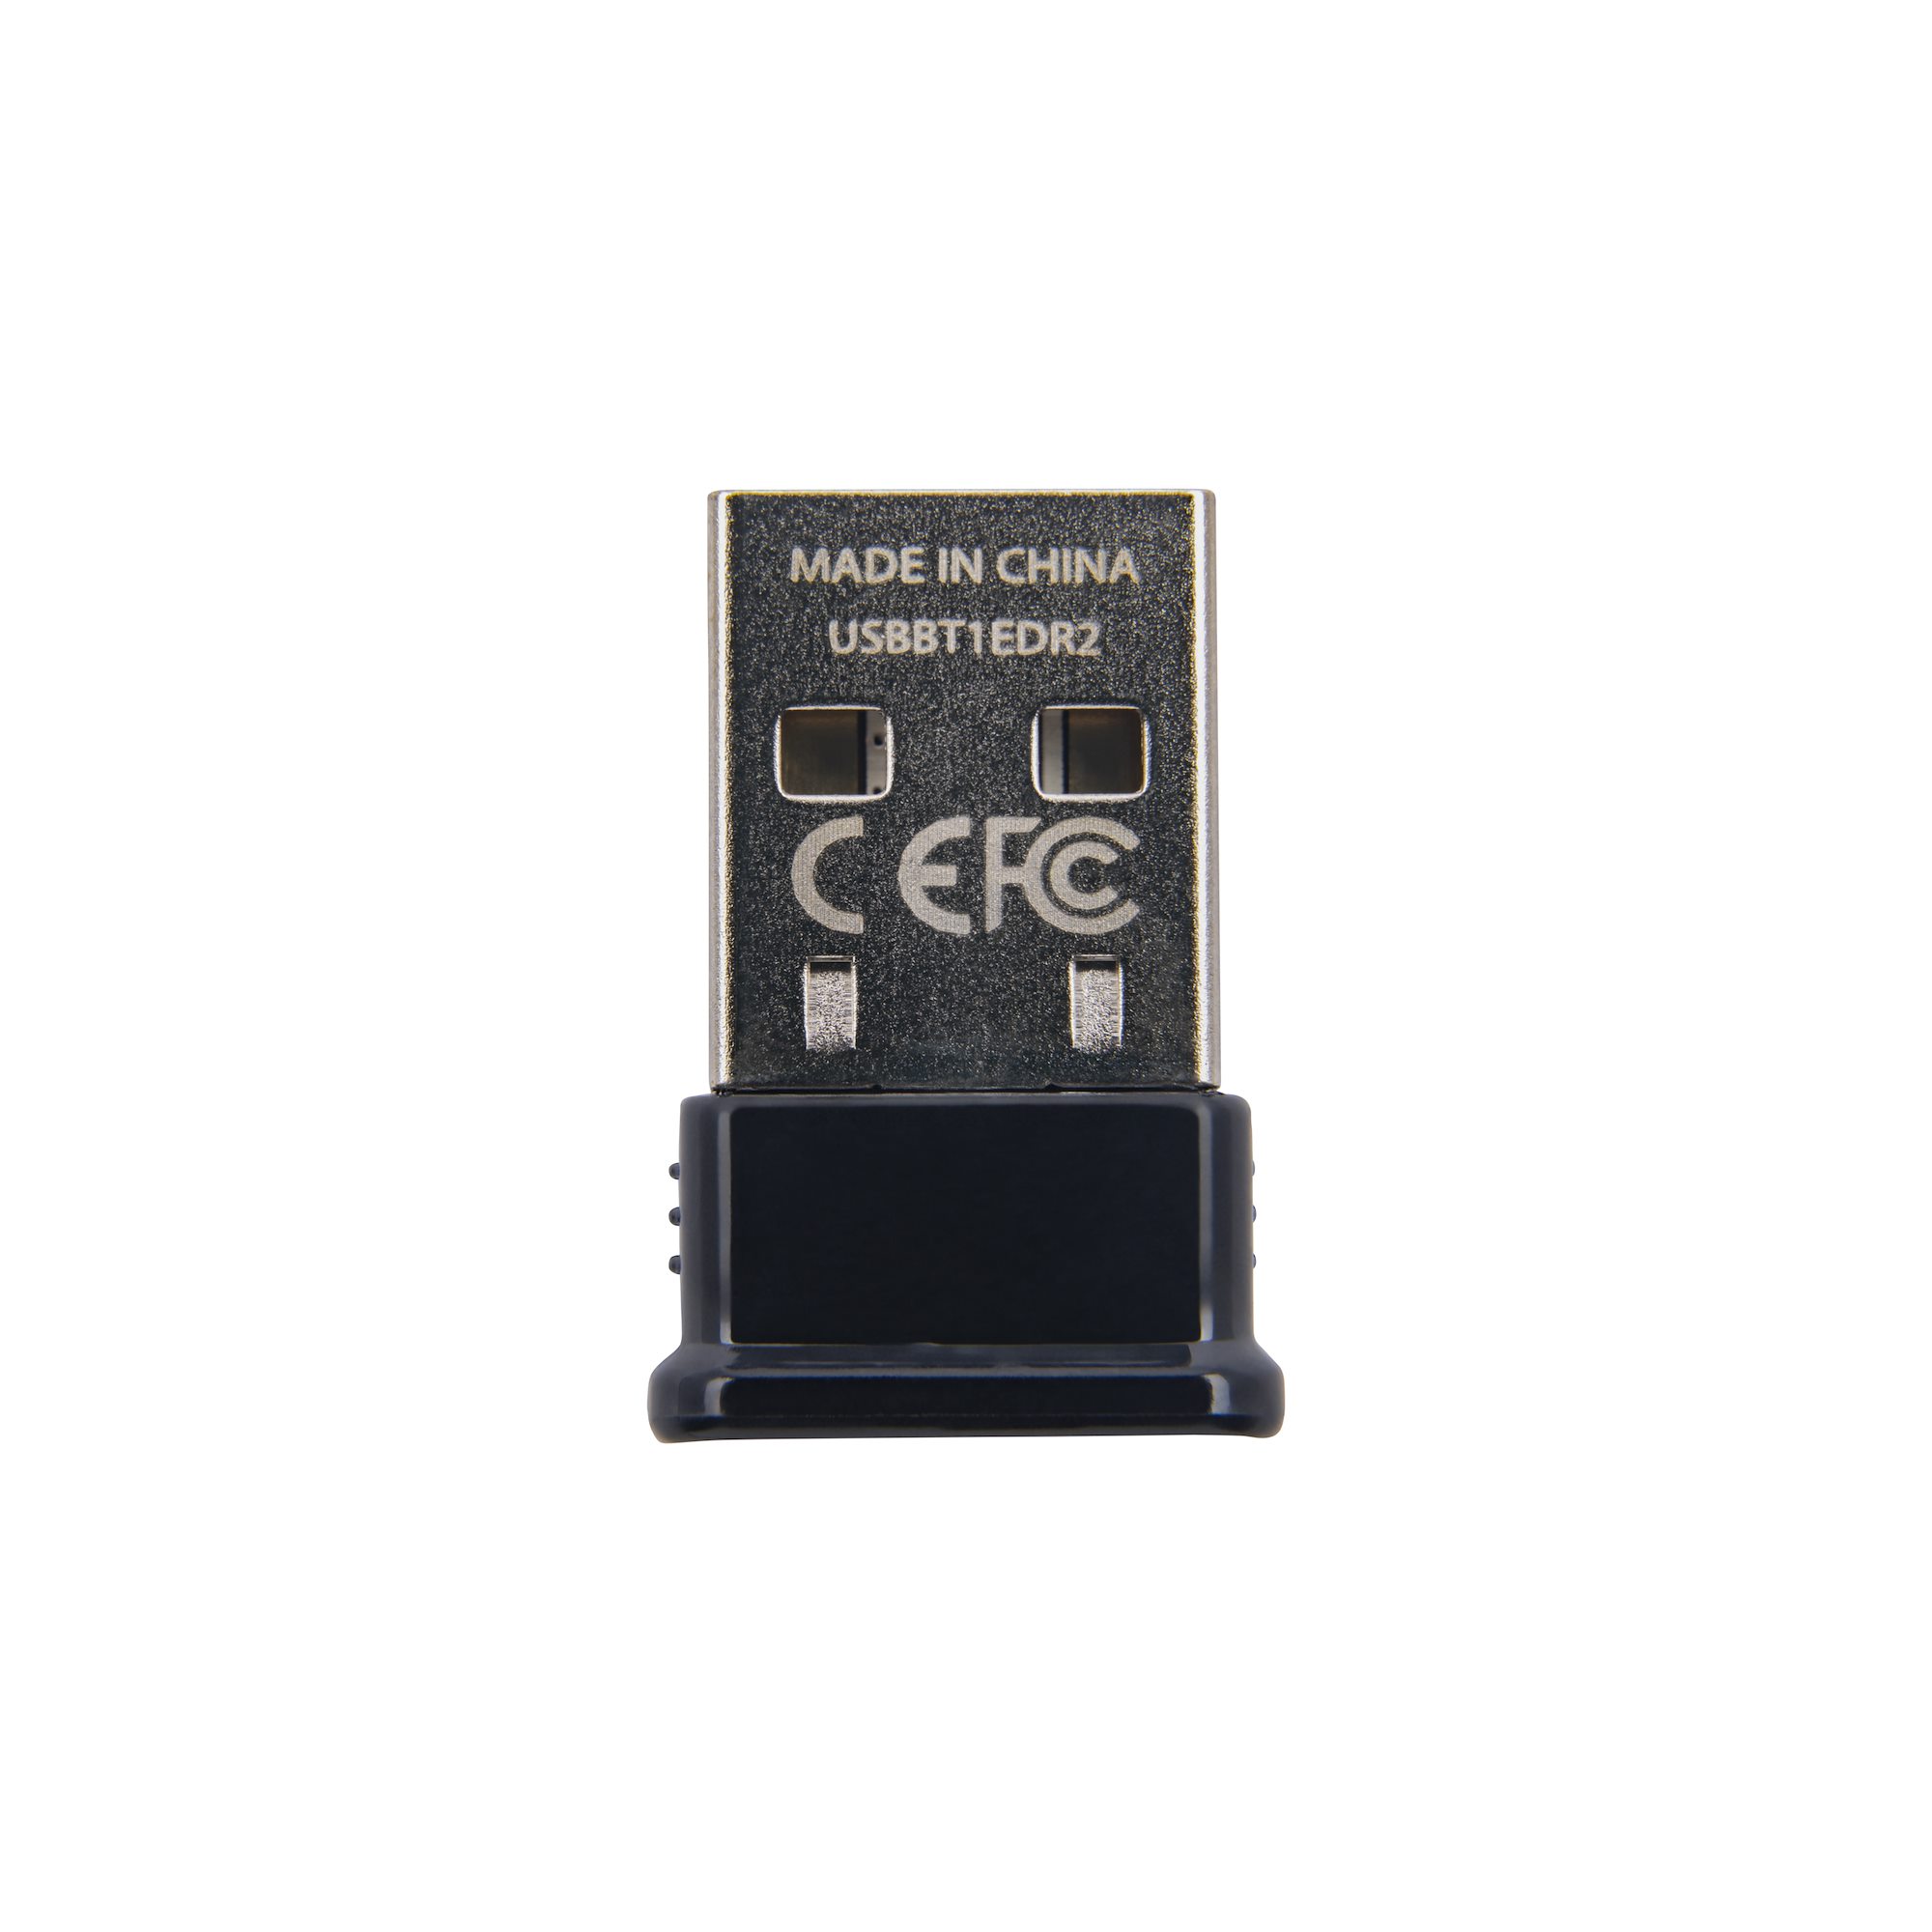 Mini USB Bluetooth Adapter V 2.0 Wireless USB Dongle V2.0 EDR For